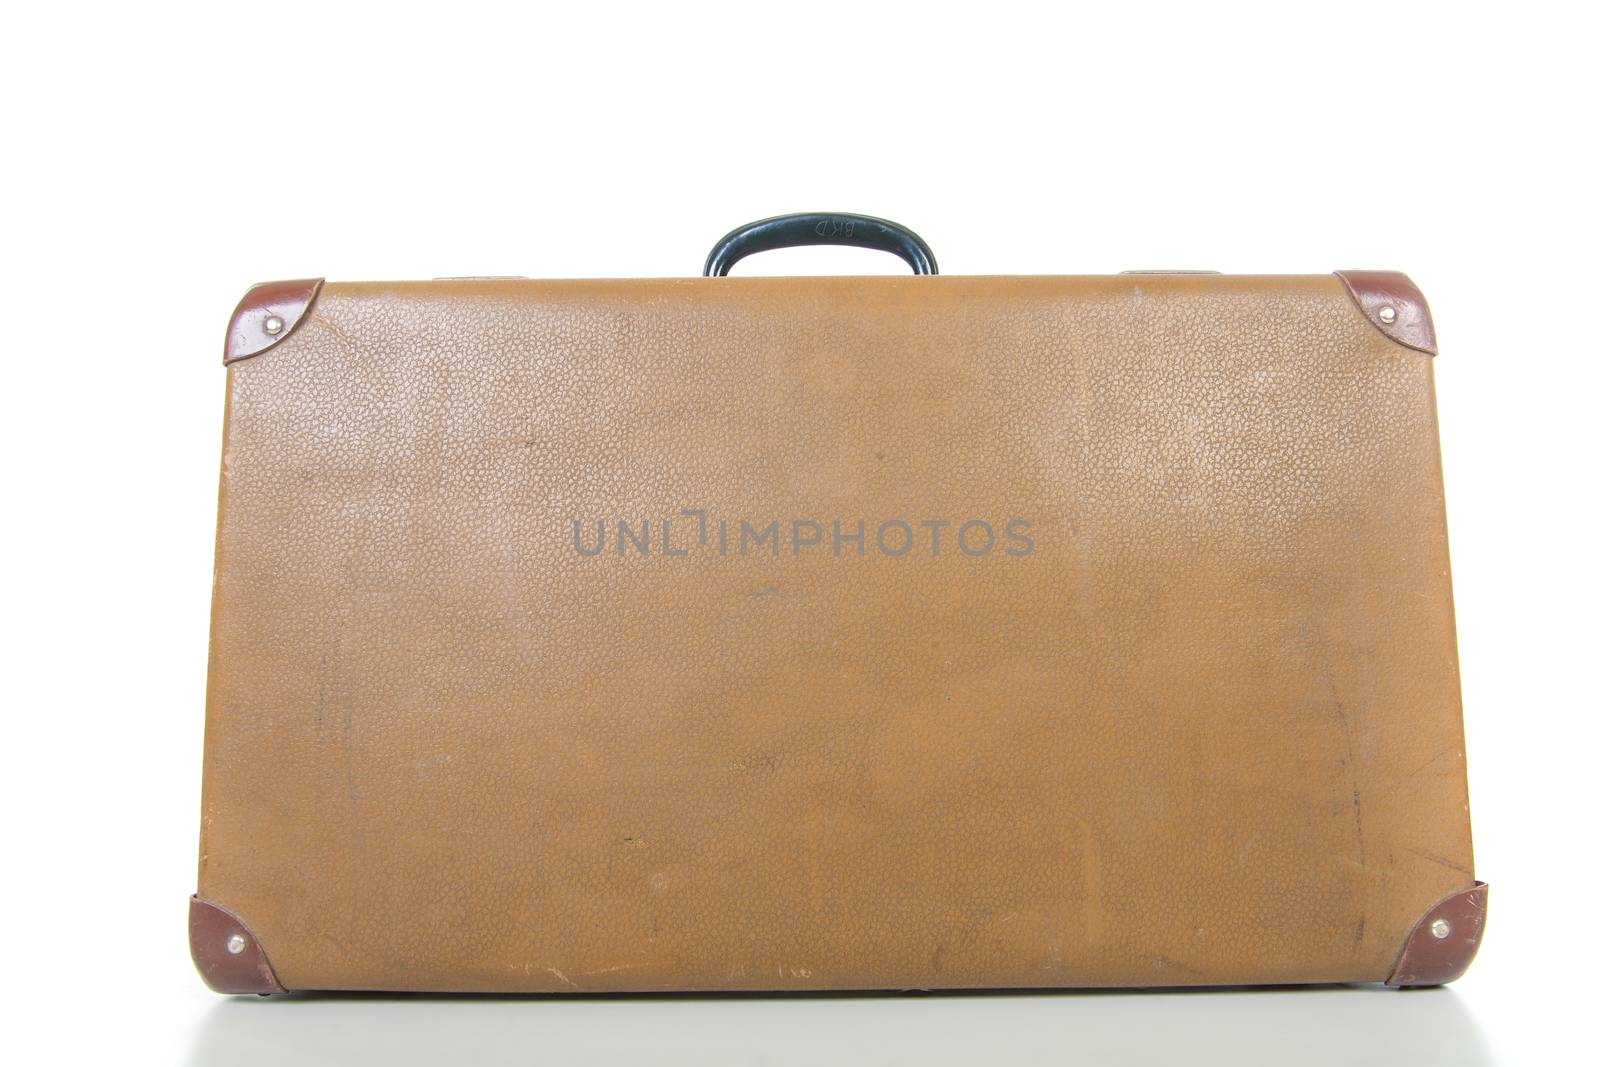 vintage suitcase isolated on white. close up